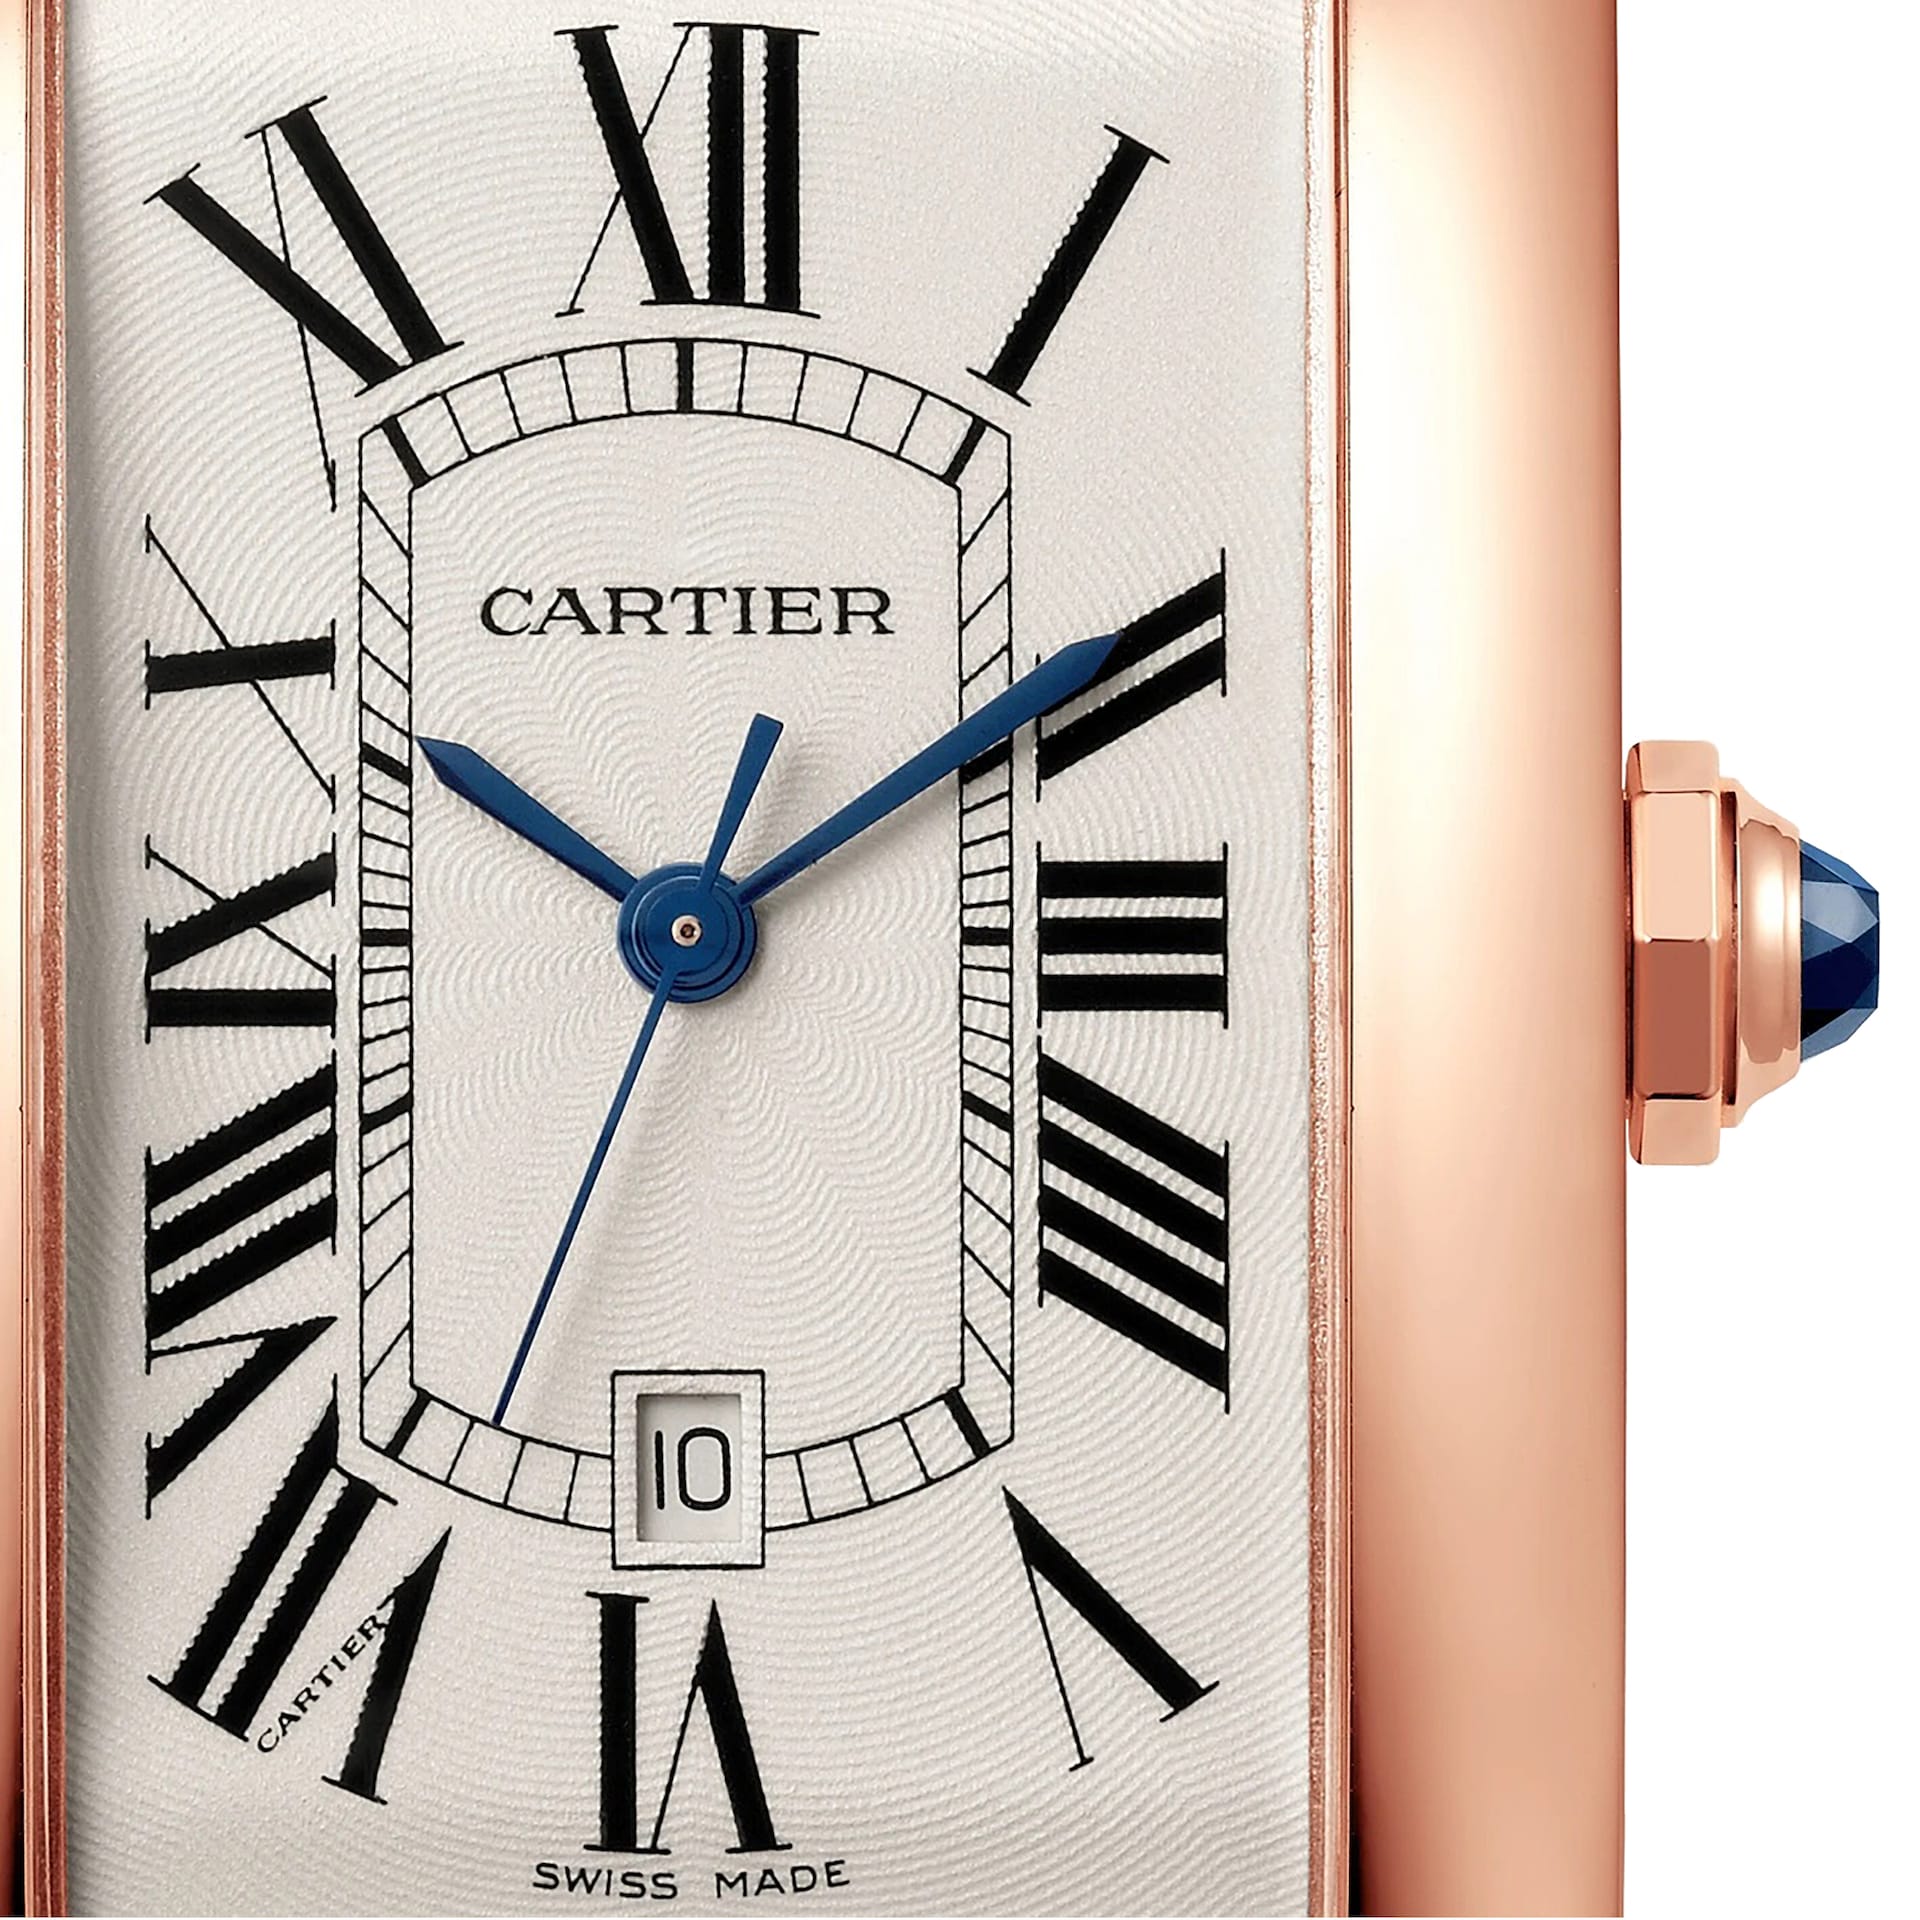 Cartier Tank Watches for Men & Women - Kapoor Watch Co